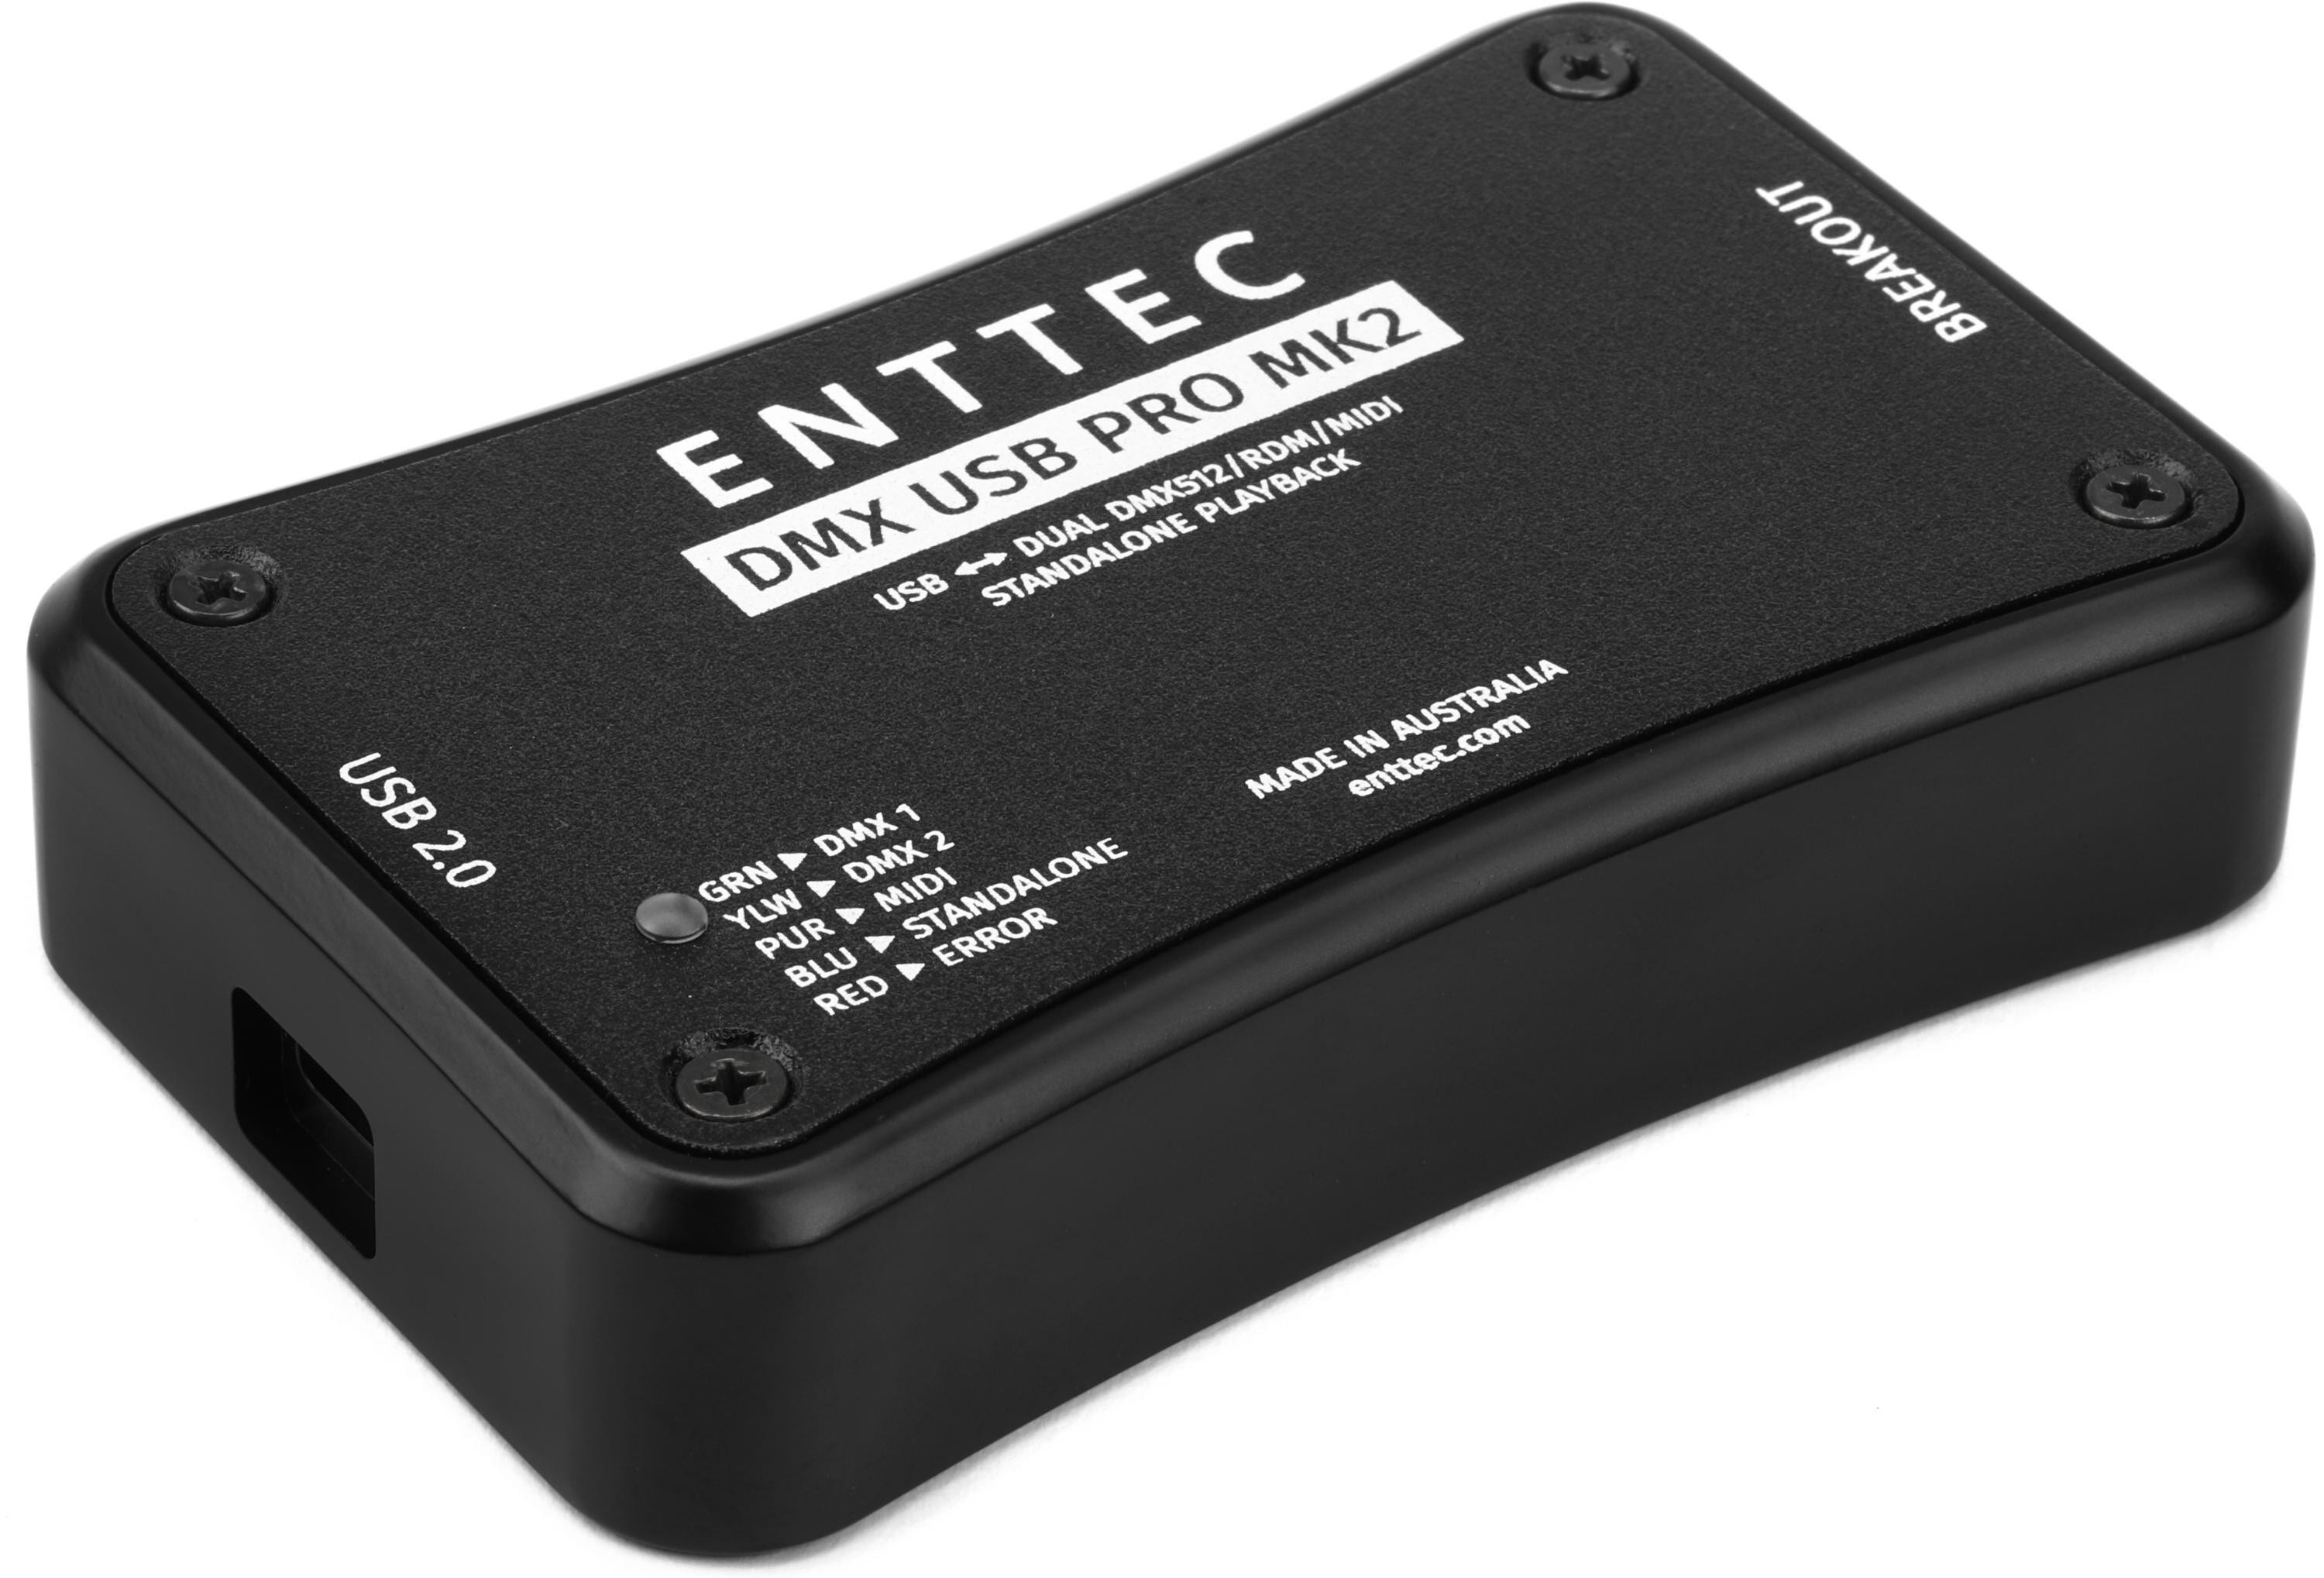 ENTTEC DMX USB Pro Lighting Controller